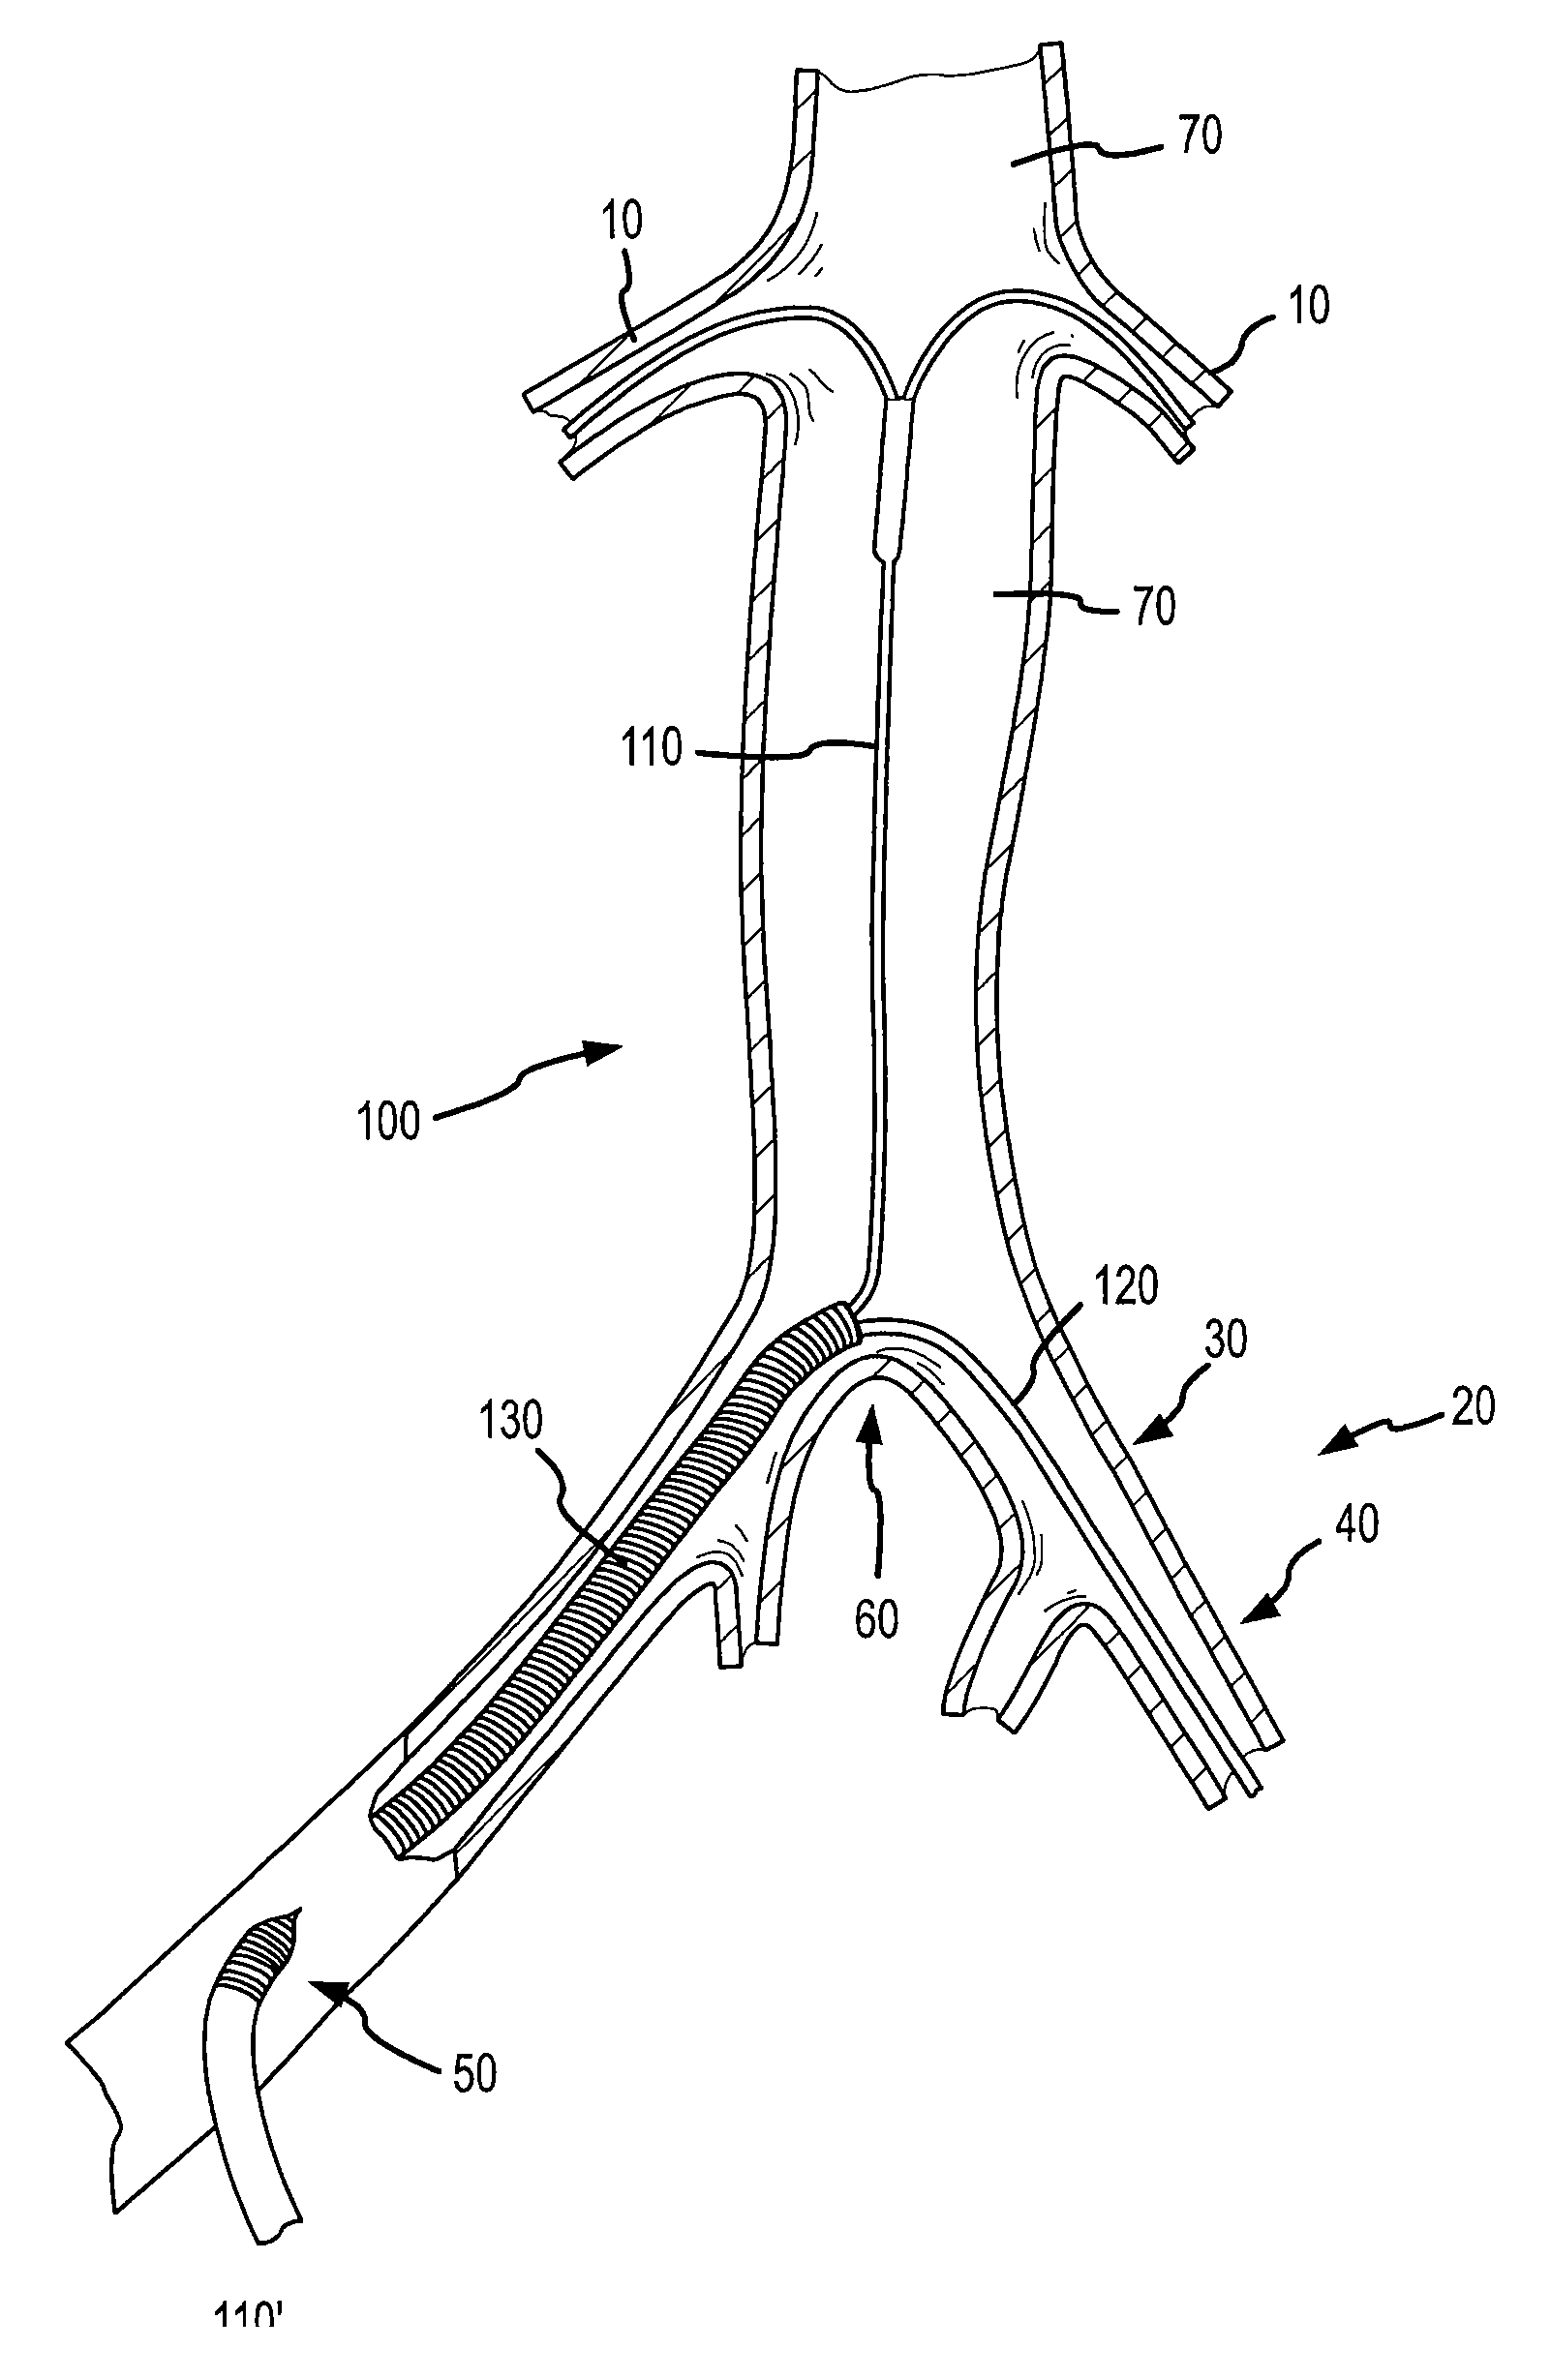 Vascular sheath with variable lumen construction